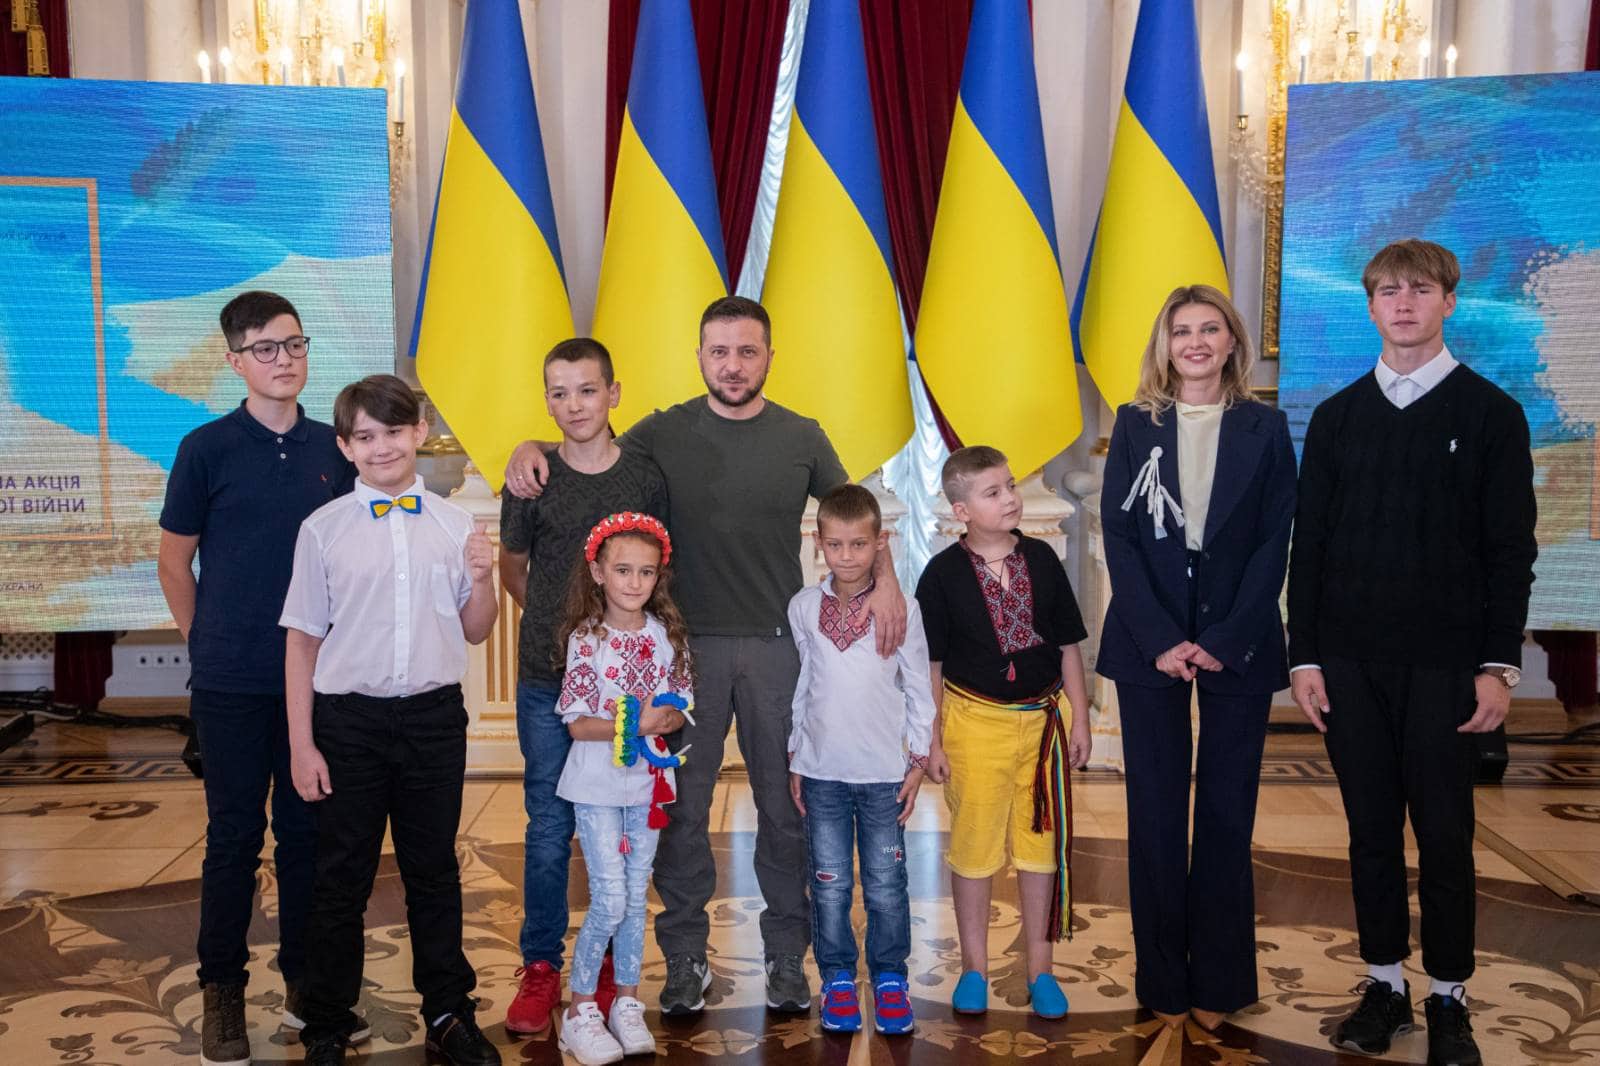 Ukrainian President Volodymyr Zelensky and First Lady Olena Zelenska honored Maksym Brovchenko, a 10-year-old artist from Berdyansk